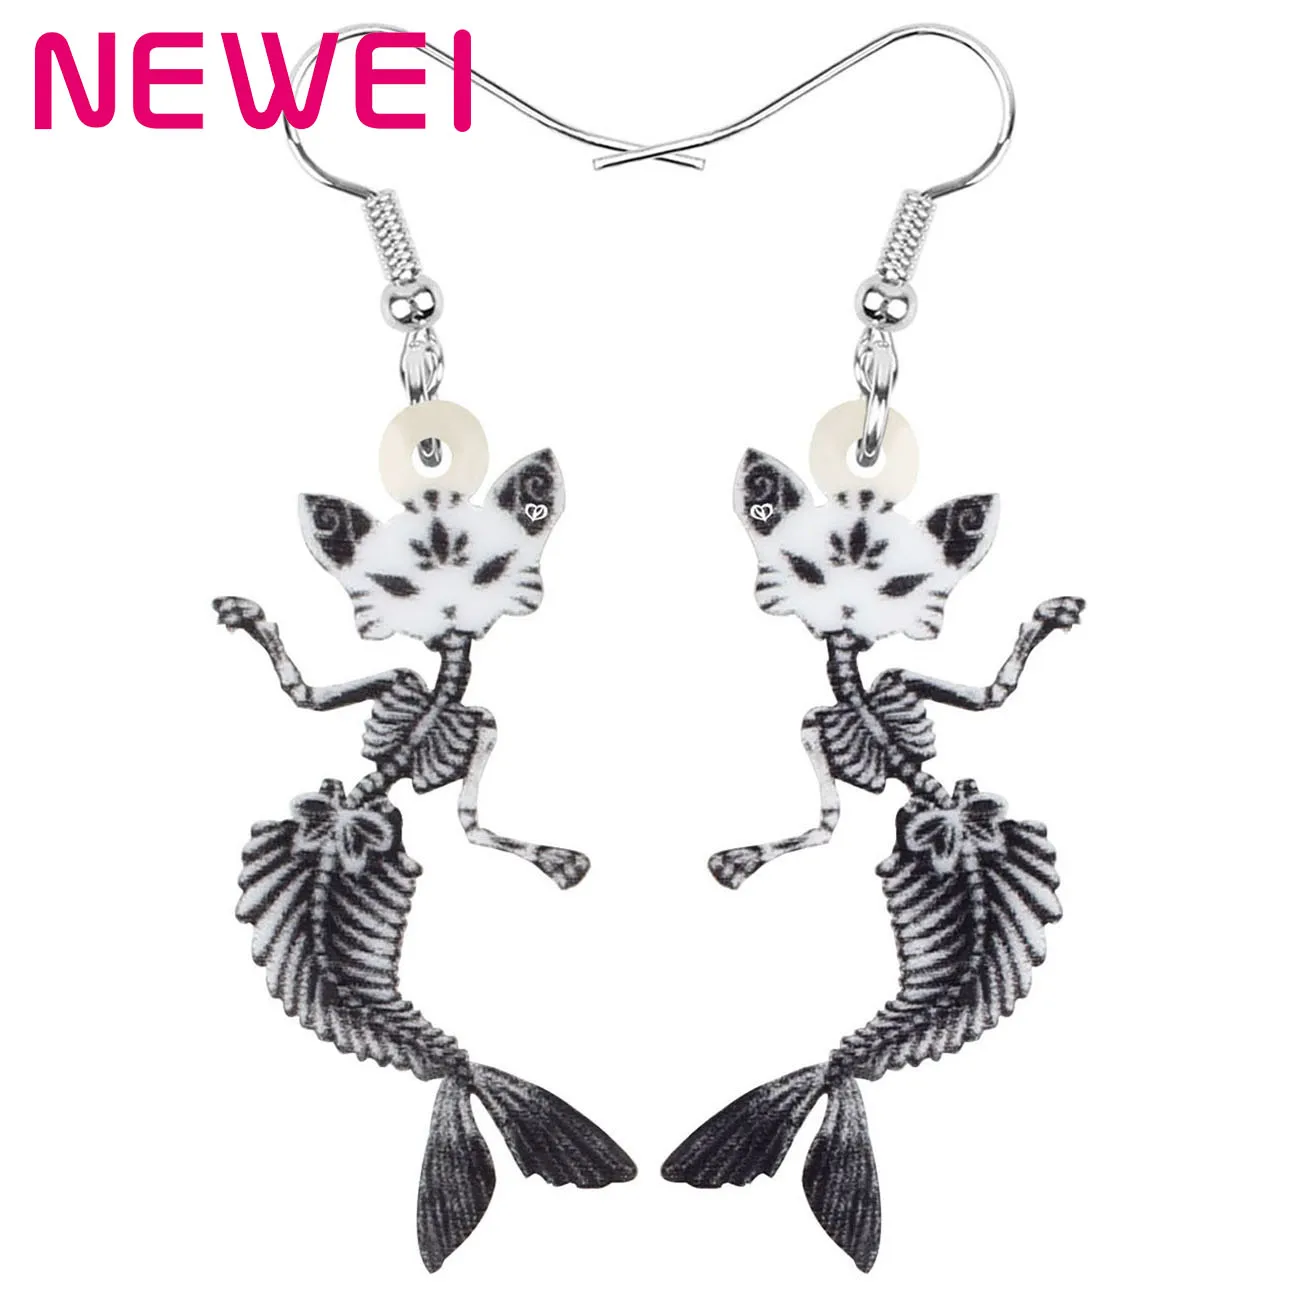 

Halloween Acrylic Cute Fish Cat Skull Earrings Drop Dangle Horrible Fashion Jewelry Charms For Women Girls Teens Festival Gift, Black